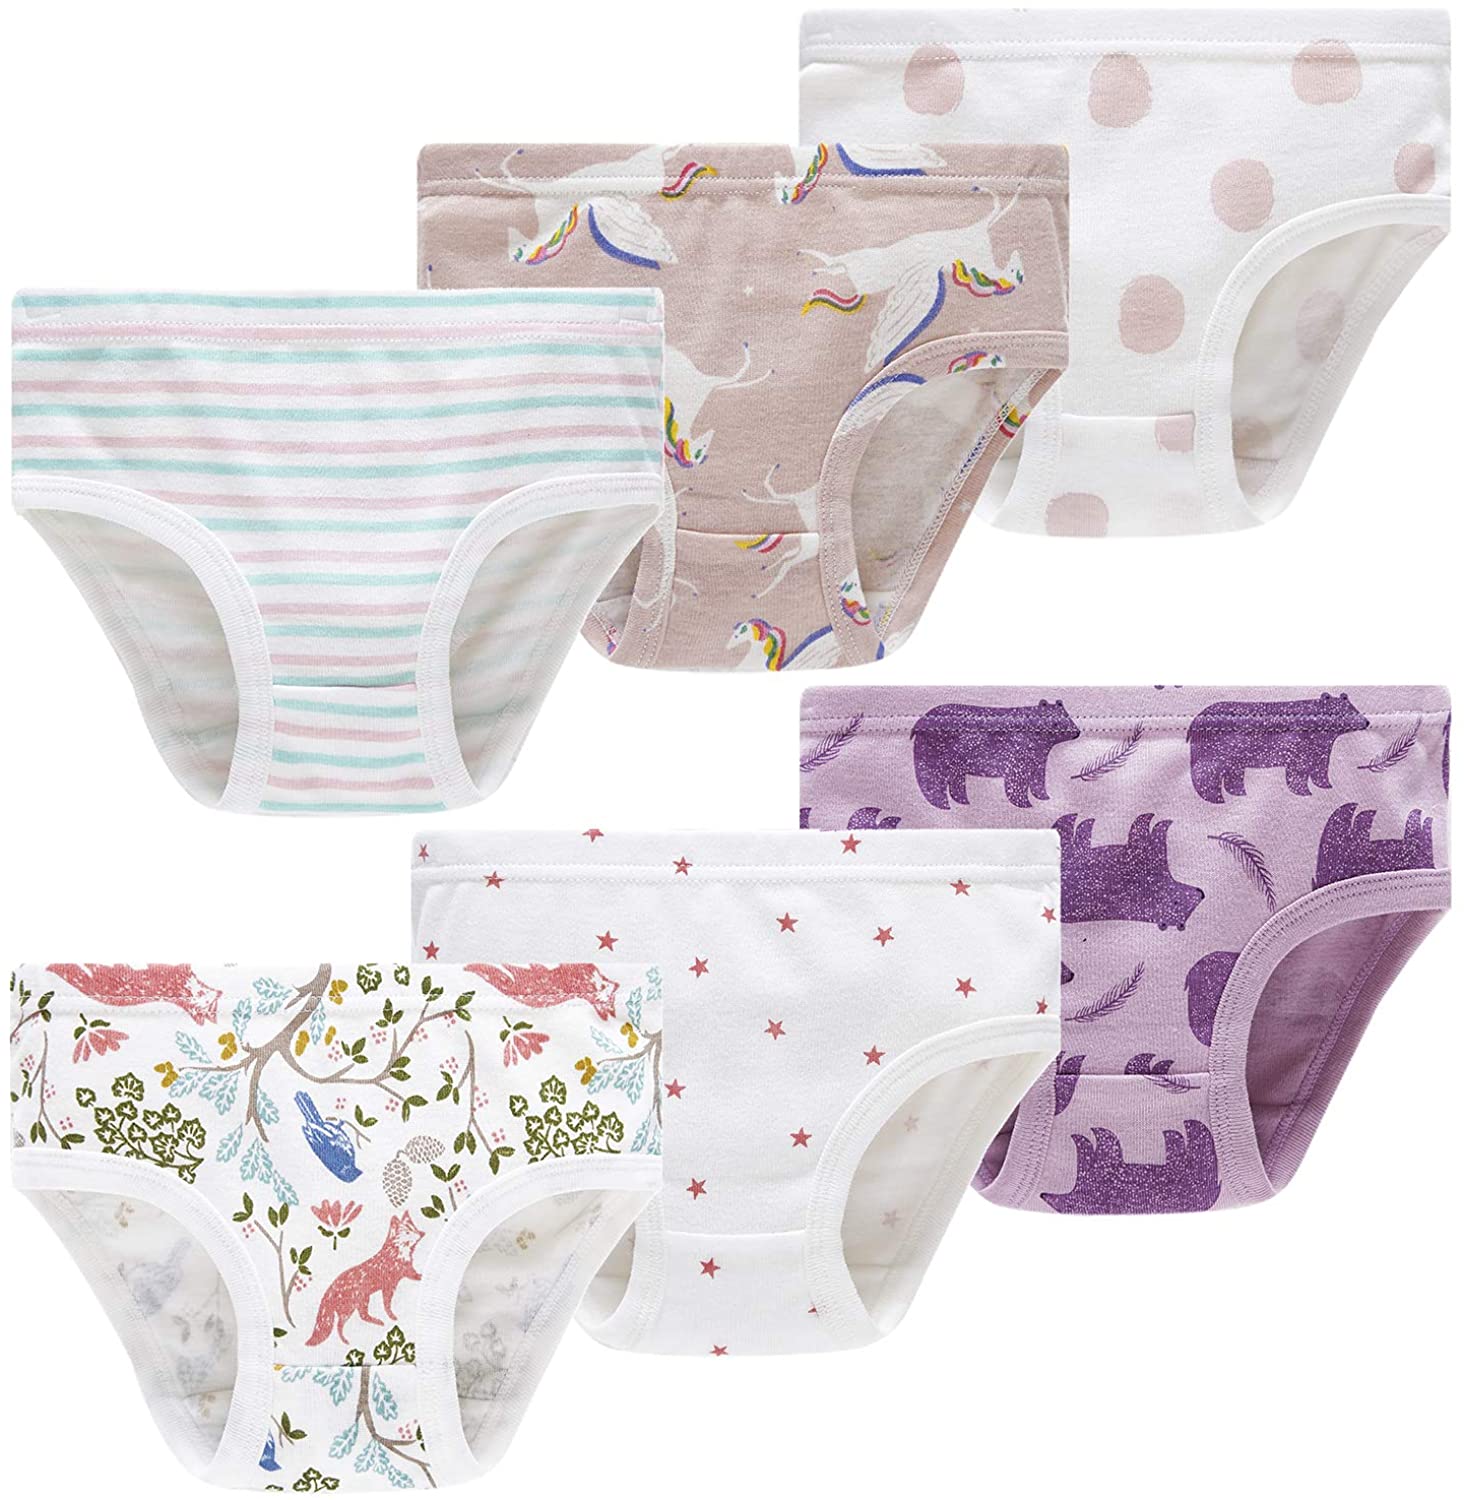 Winging Day Little Girls' Cotton Panties Baby, Multi-pattern #12, Size ...